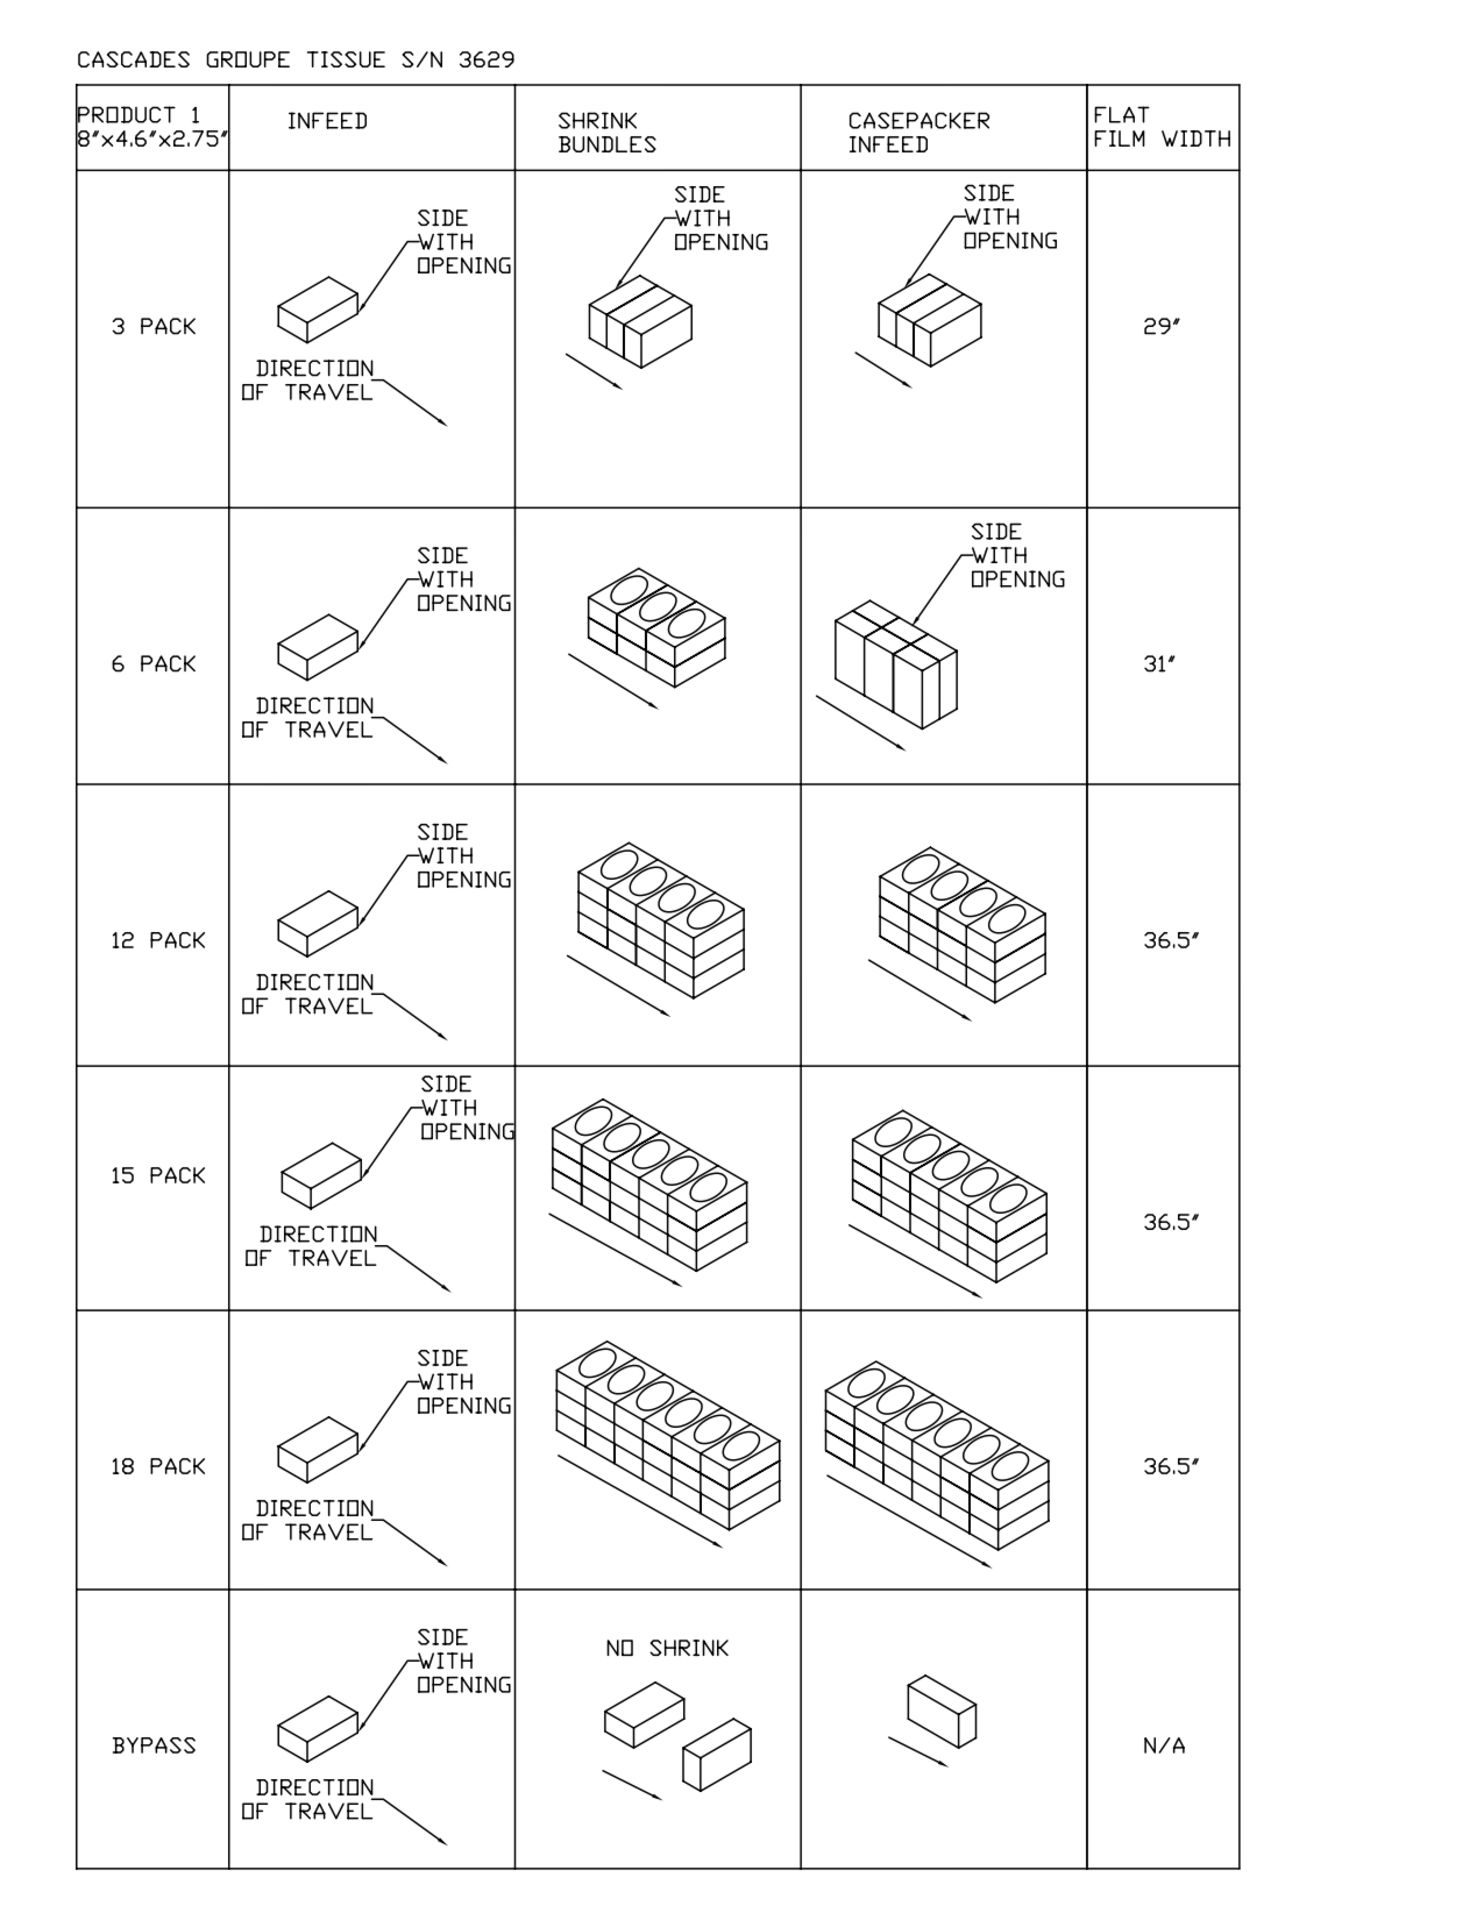 2010 SHRINK WRAPPER FULLY AUTOMATIC, BRAND: POLY PACK, MODEL CFH 16-24-48VHL(3), 600V, 40AMP, - Image 25 of 29